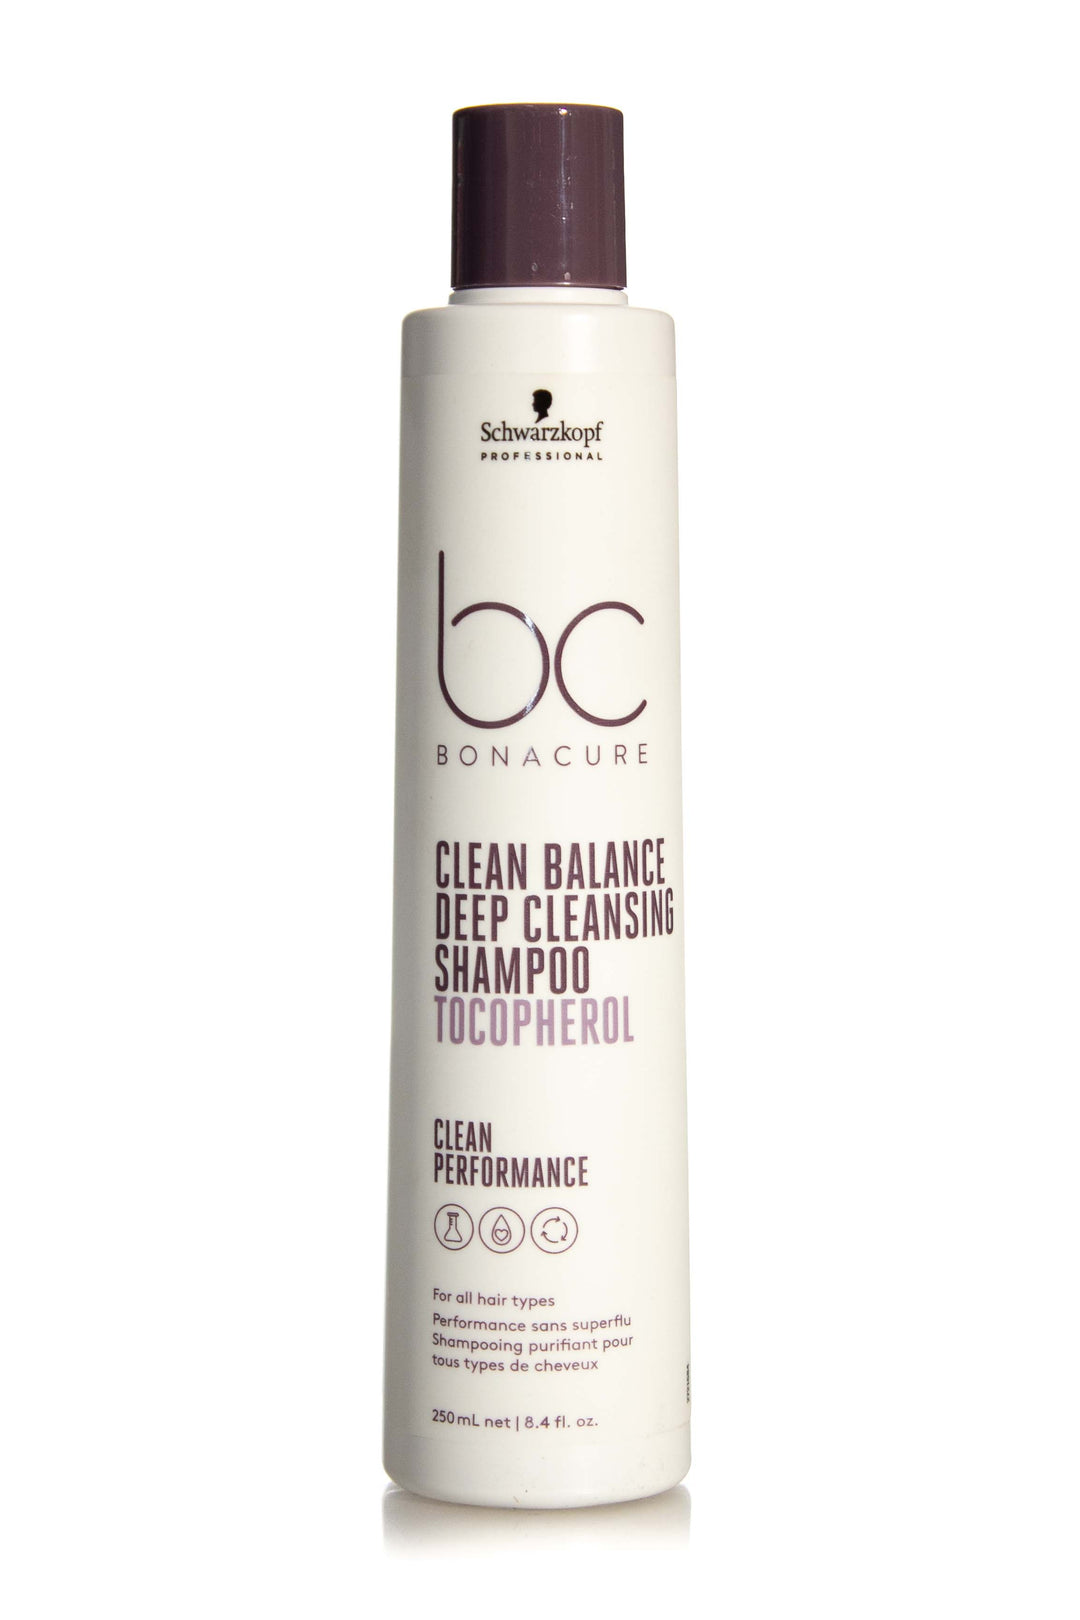 Schwarzkopf Bonacure Clean Balance Deep Cleansing Shampoo 250ml